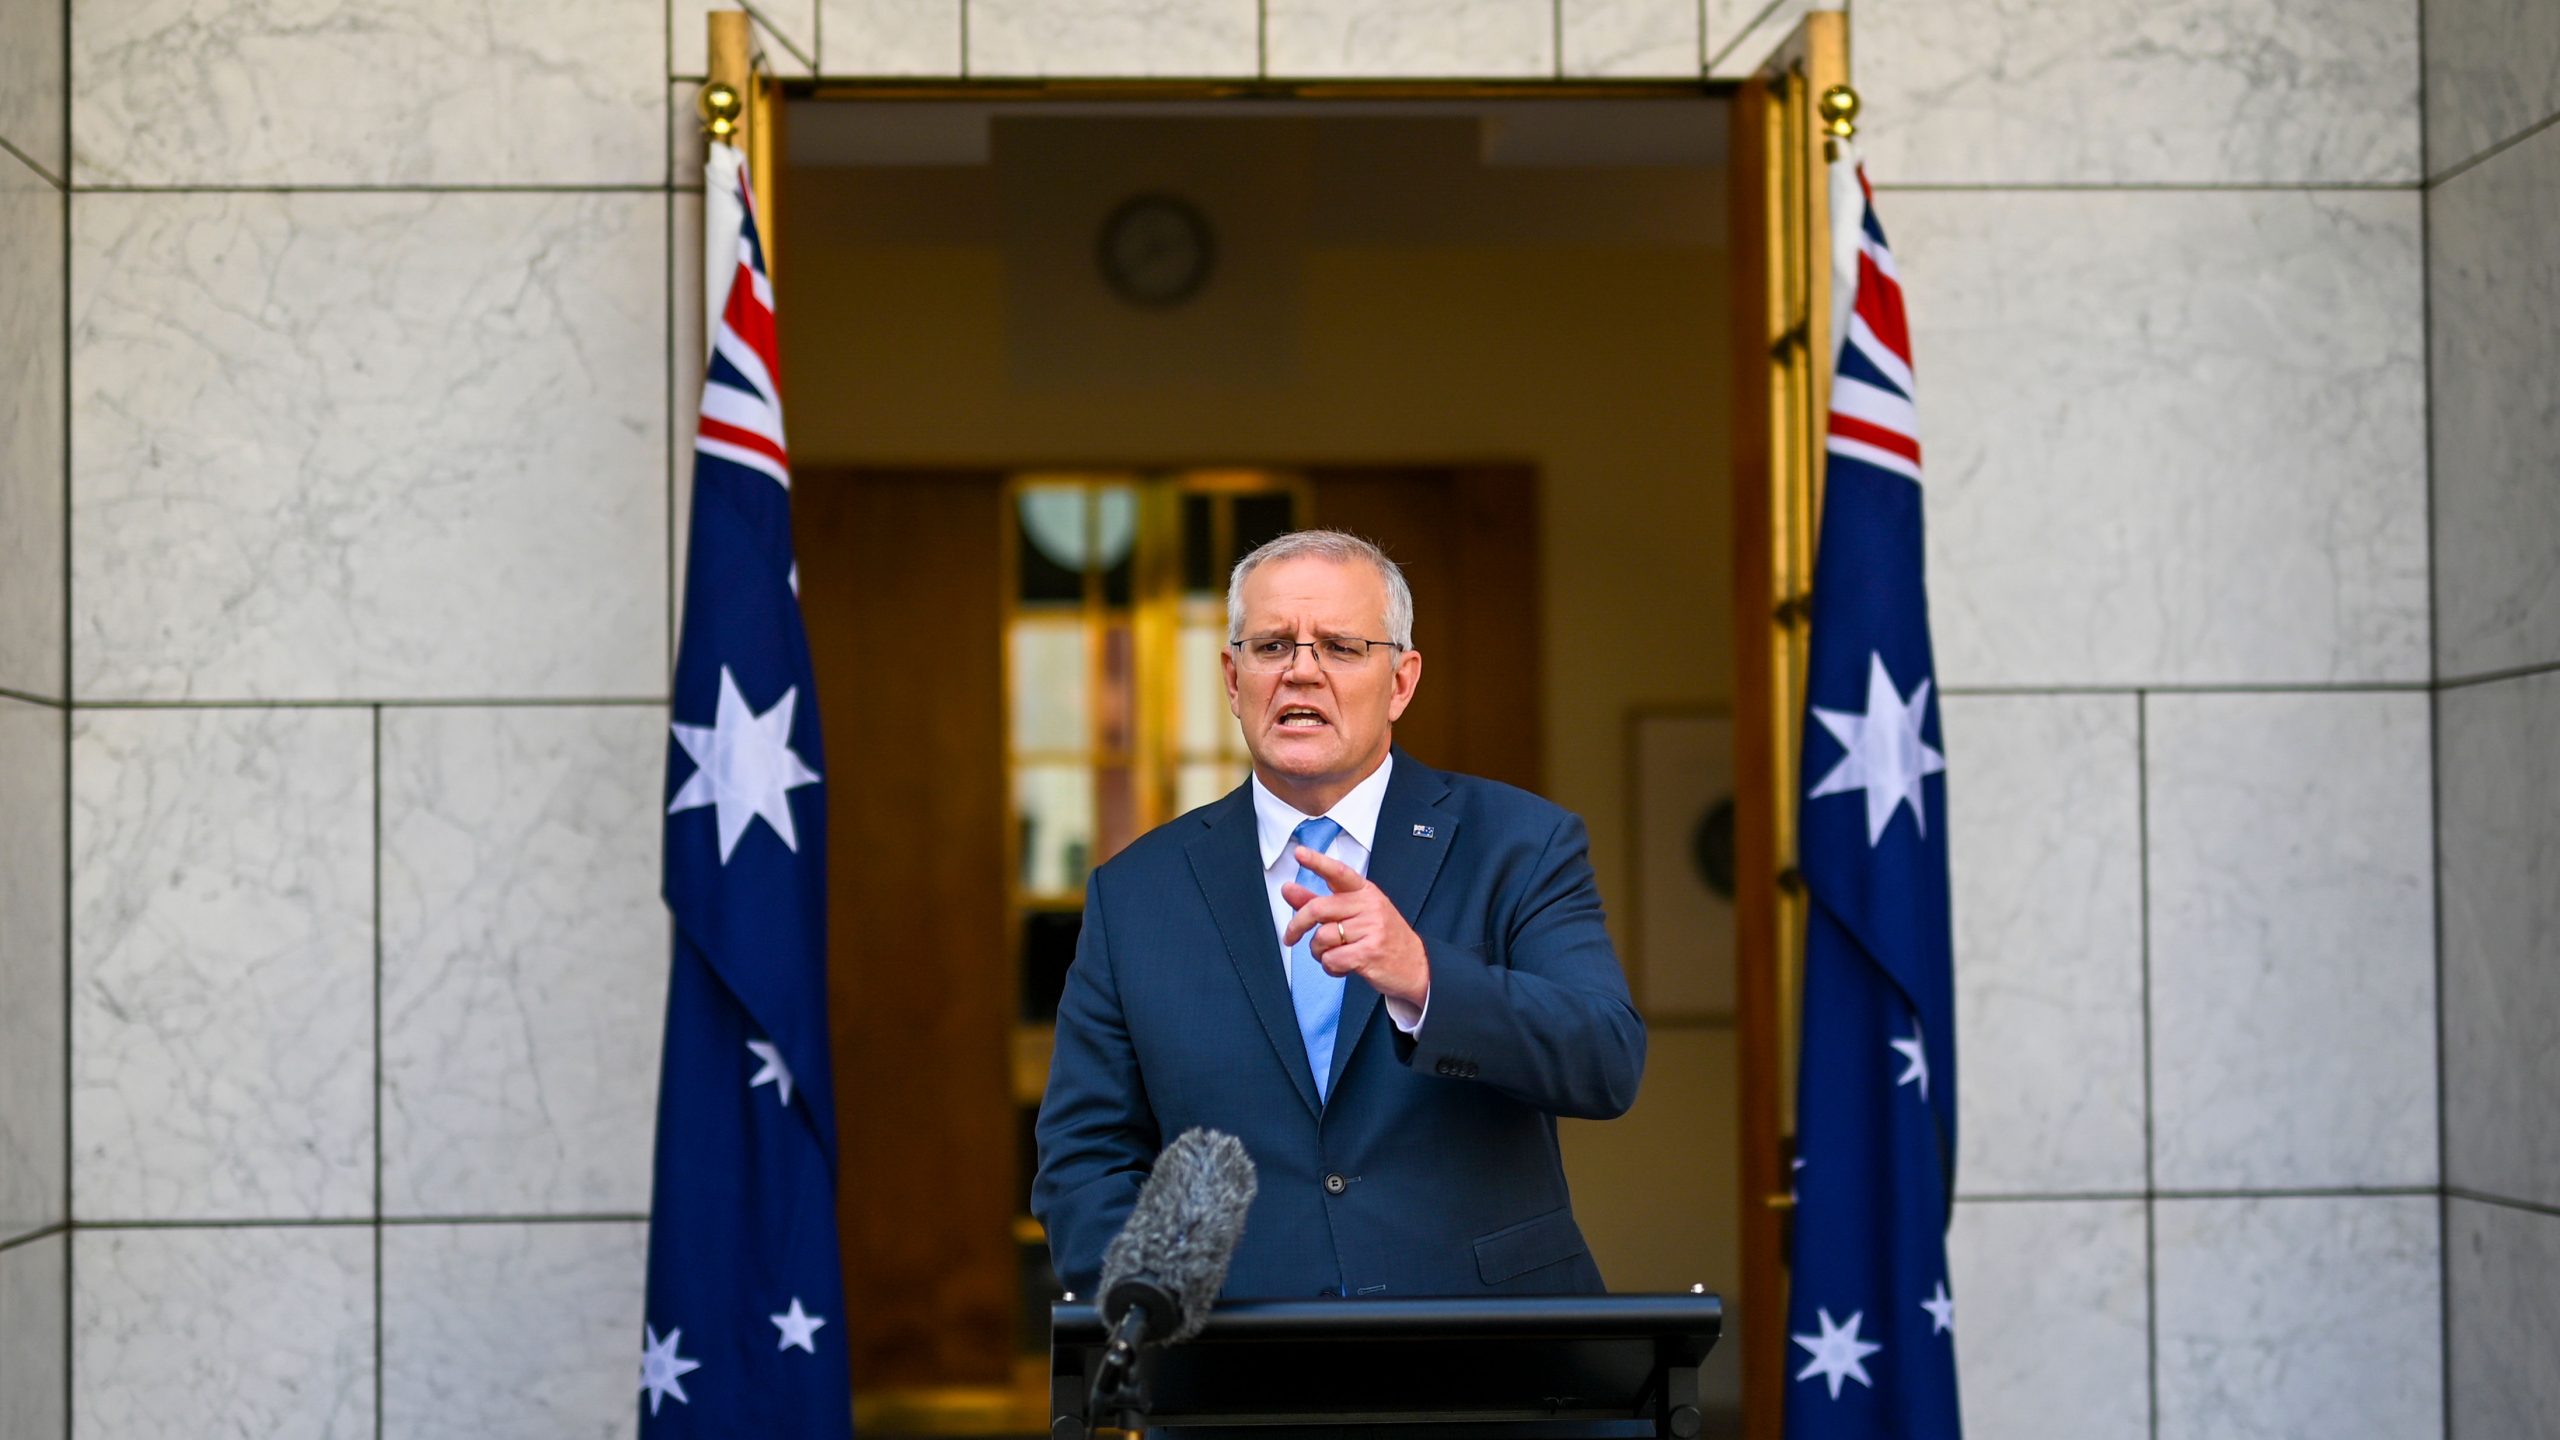 Australia PM Scott Morrison’s security vehicle crashes during election campaign